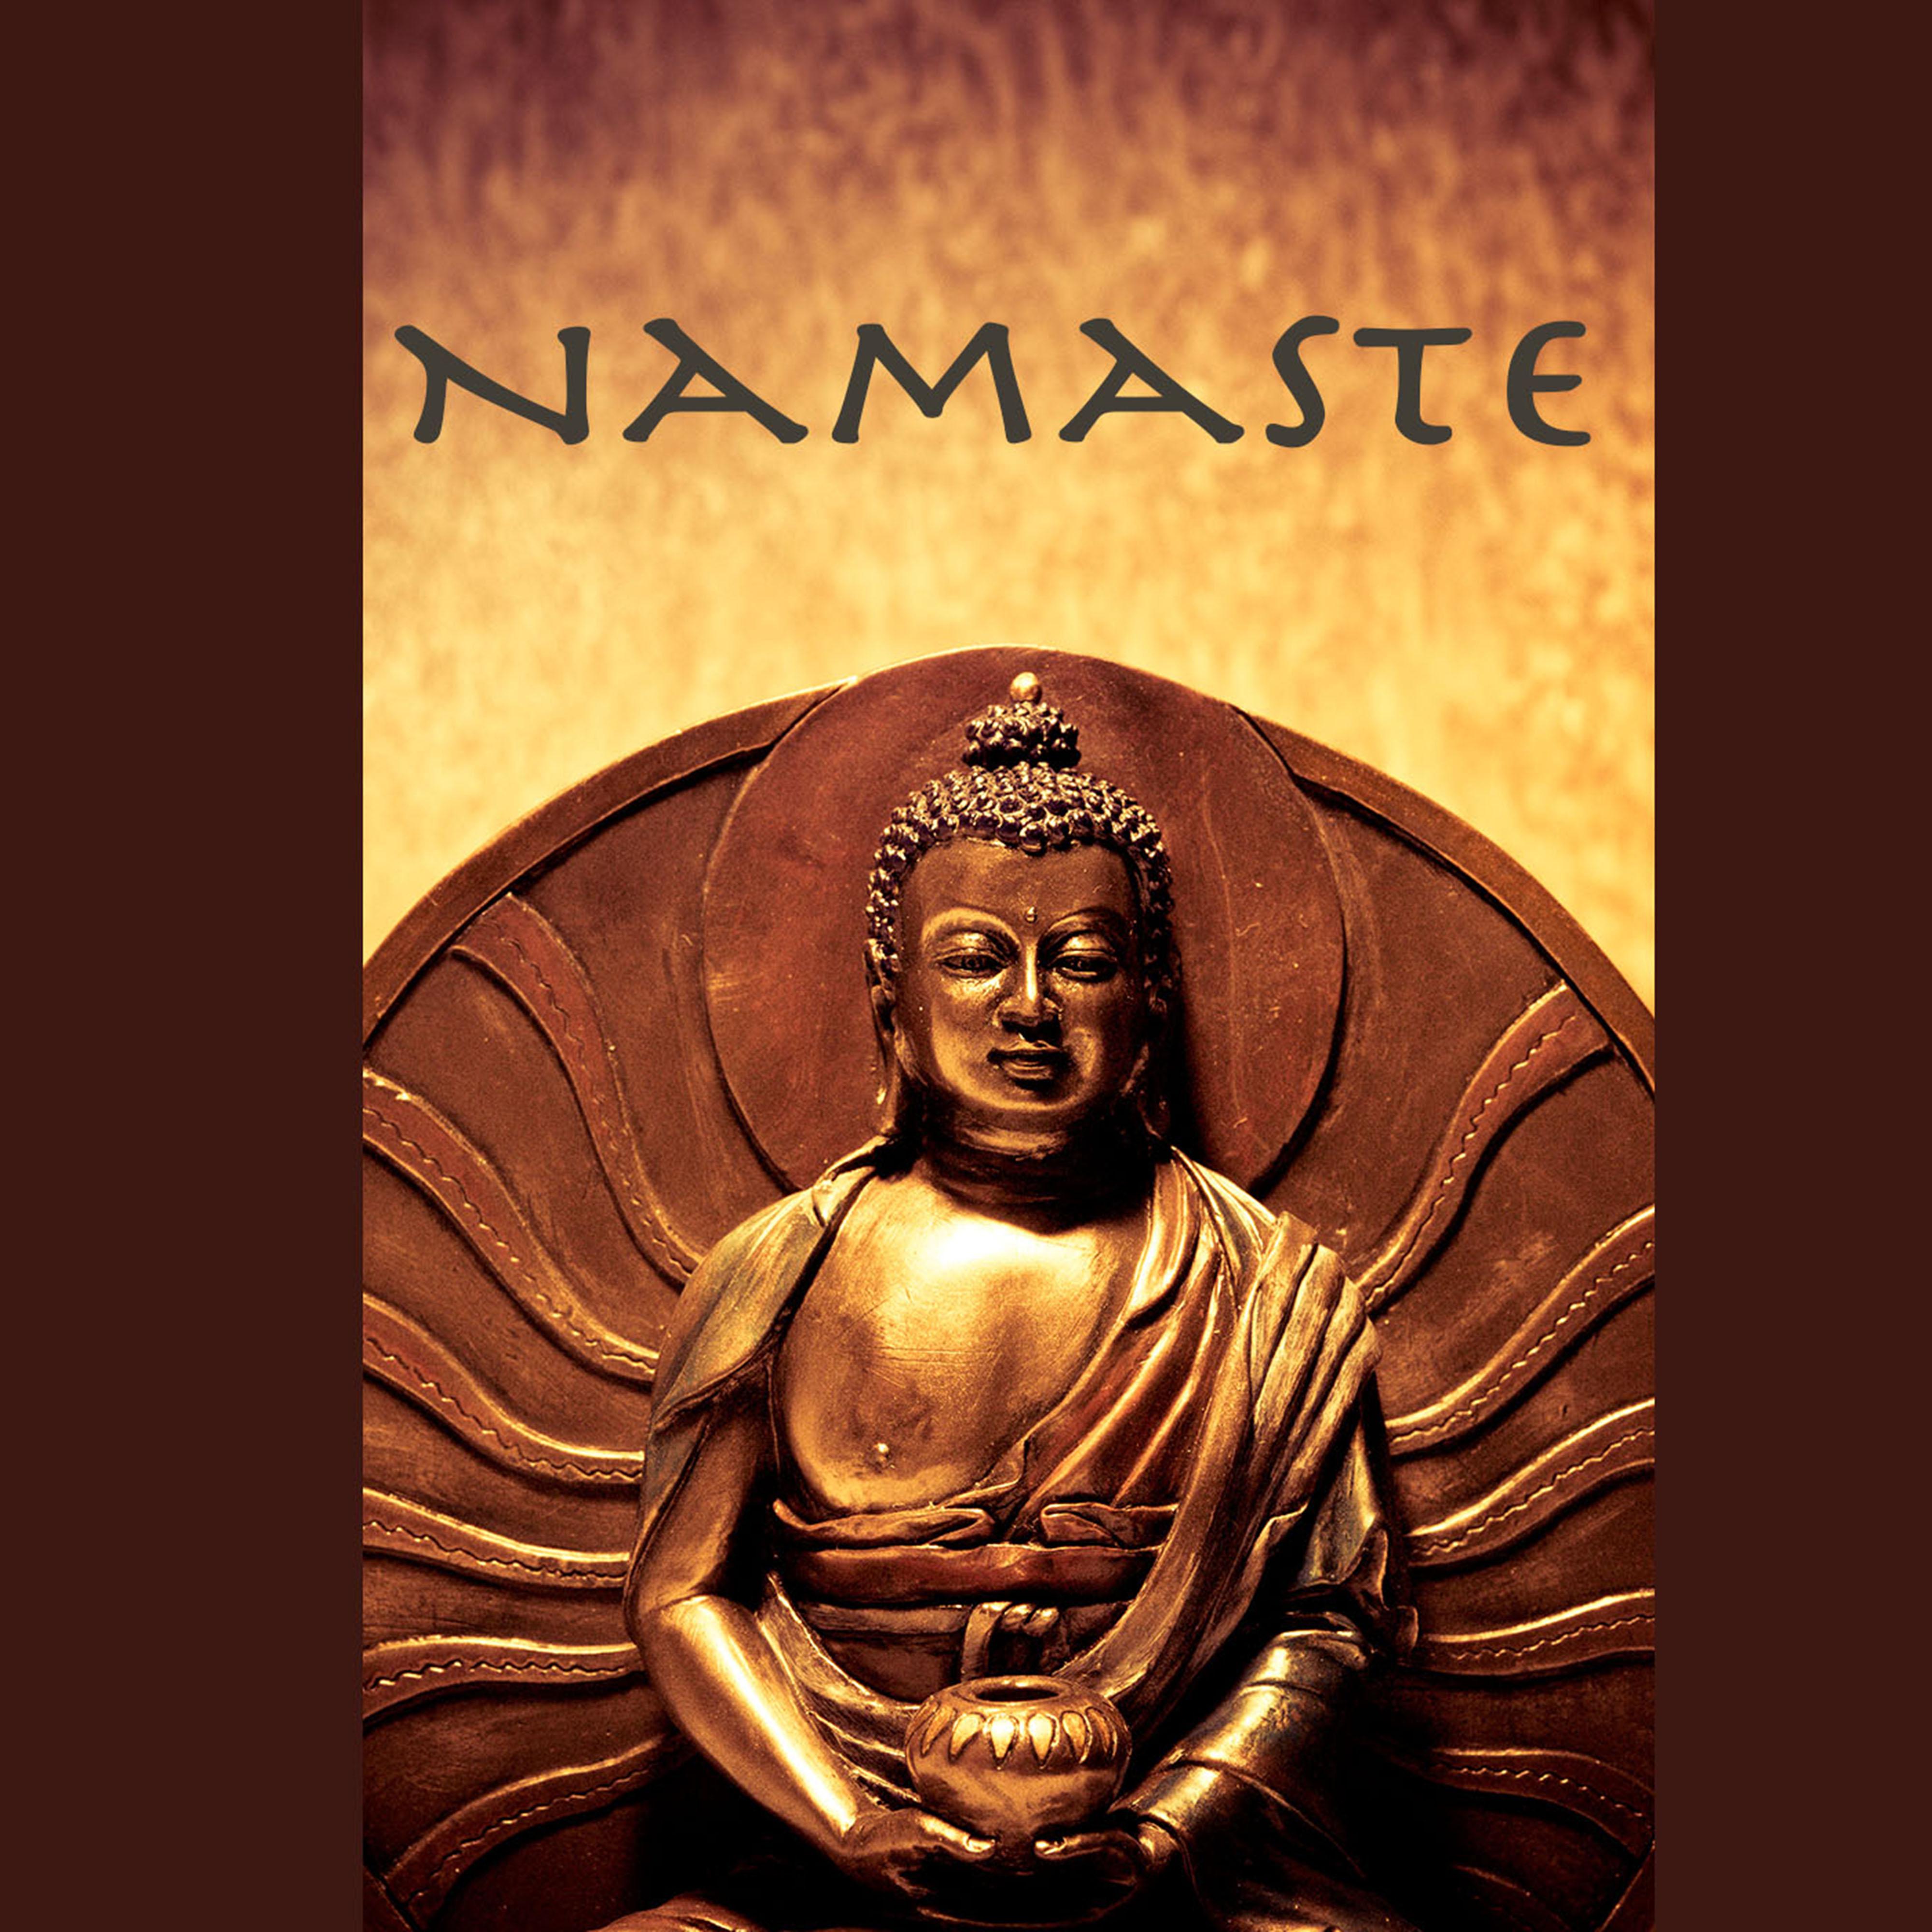 Namaste - Yoga Music, Amazing Peaceful Music for Yoga Classes and Relaxation